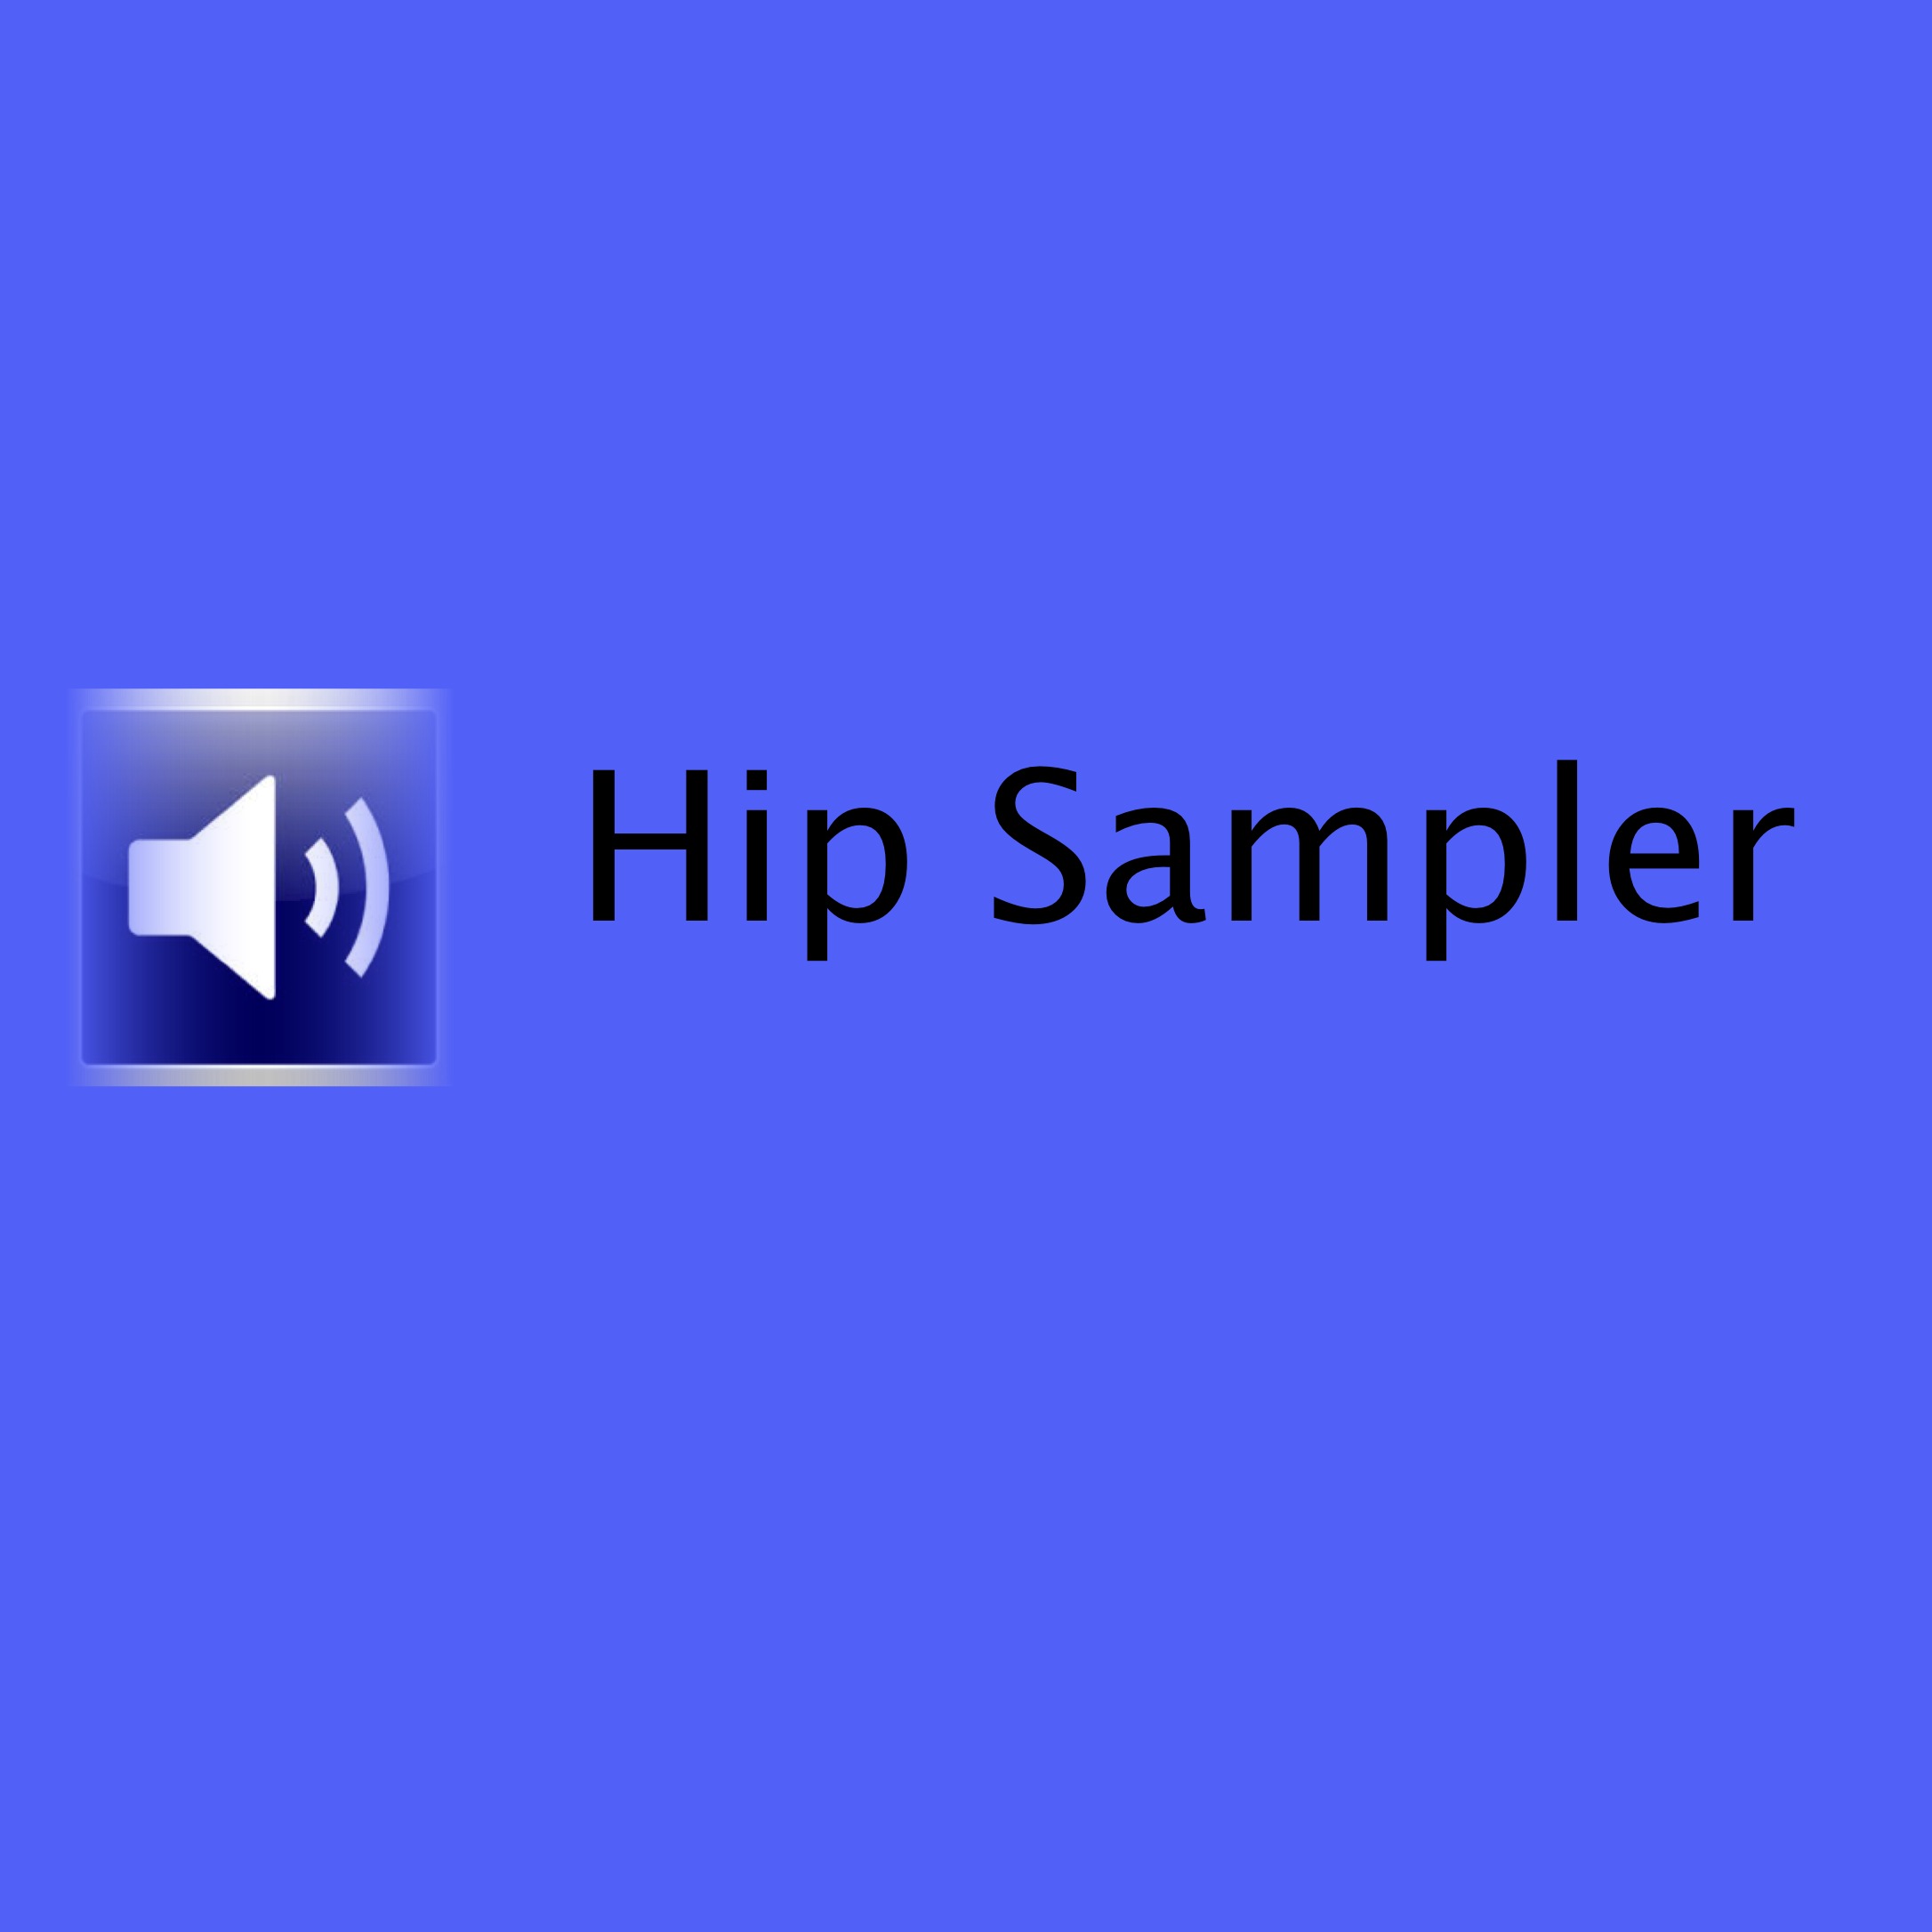 HIP sampler